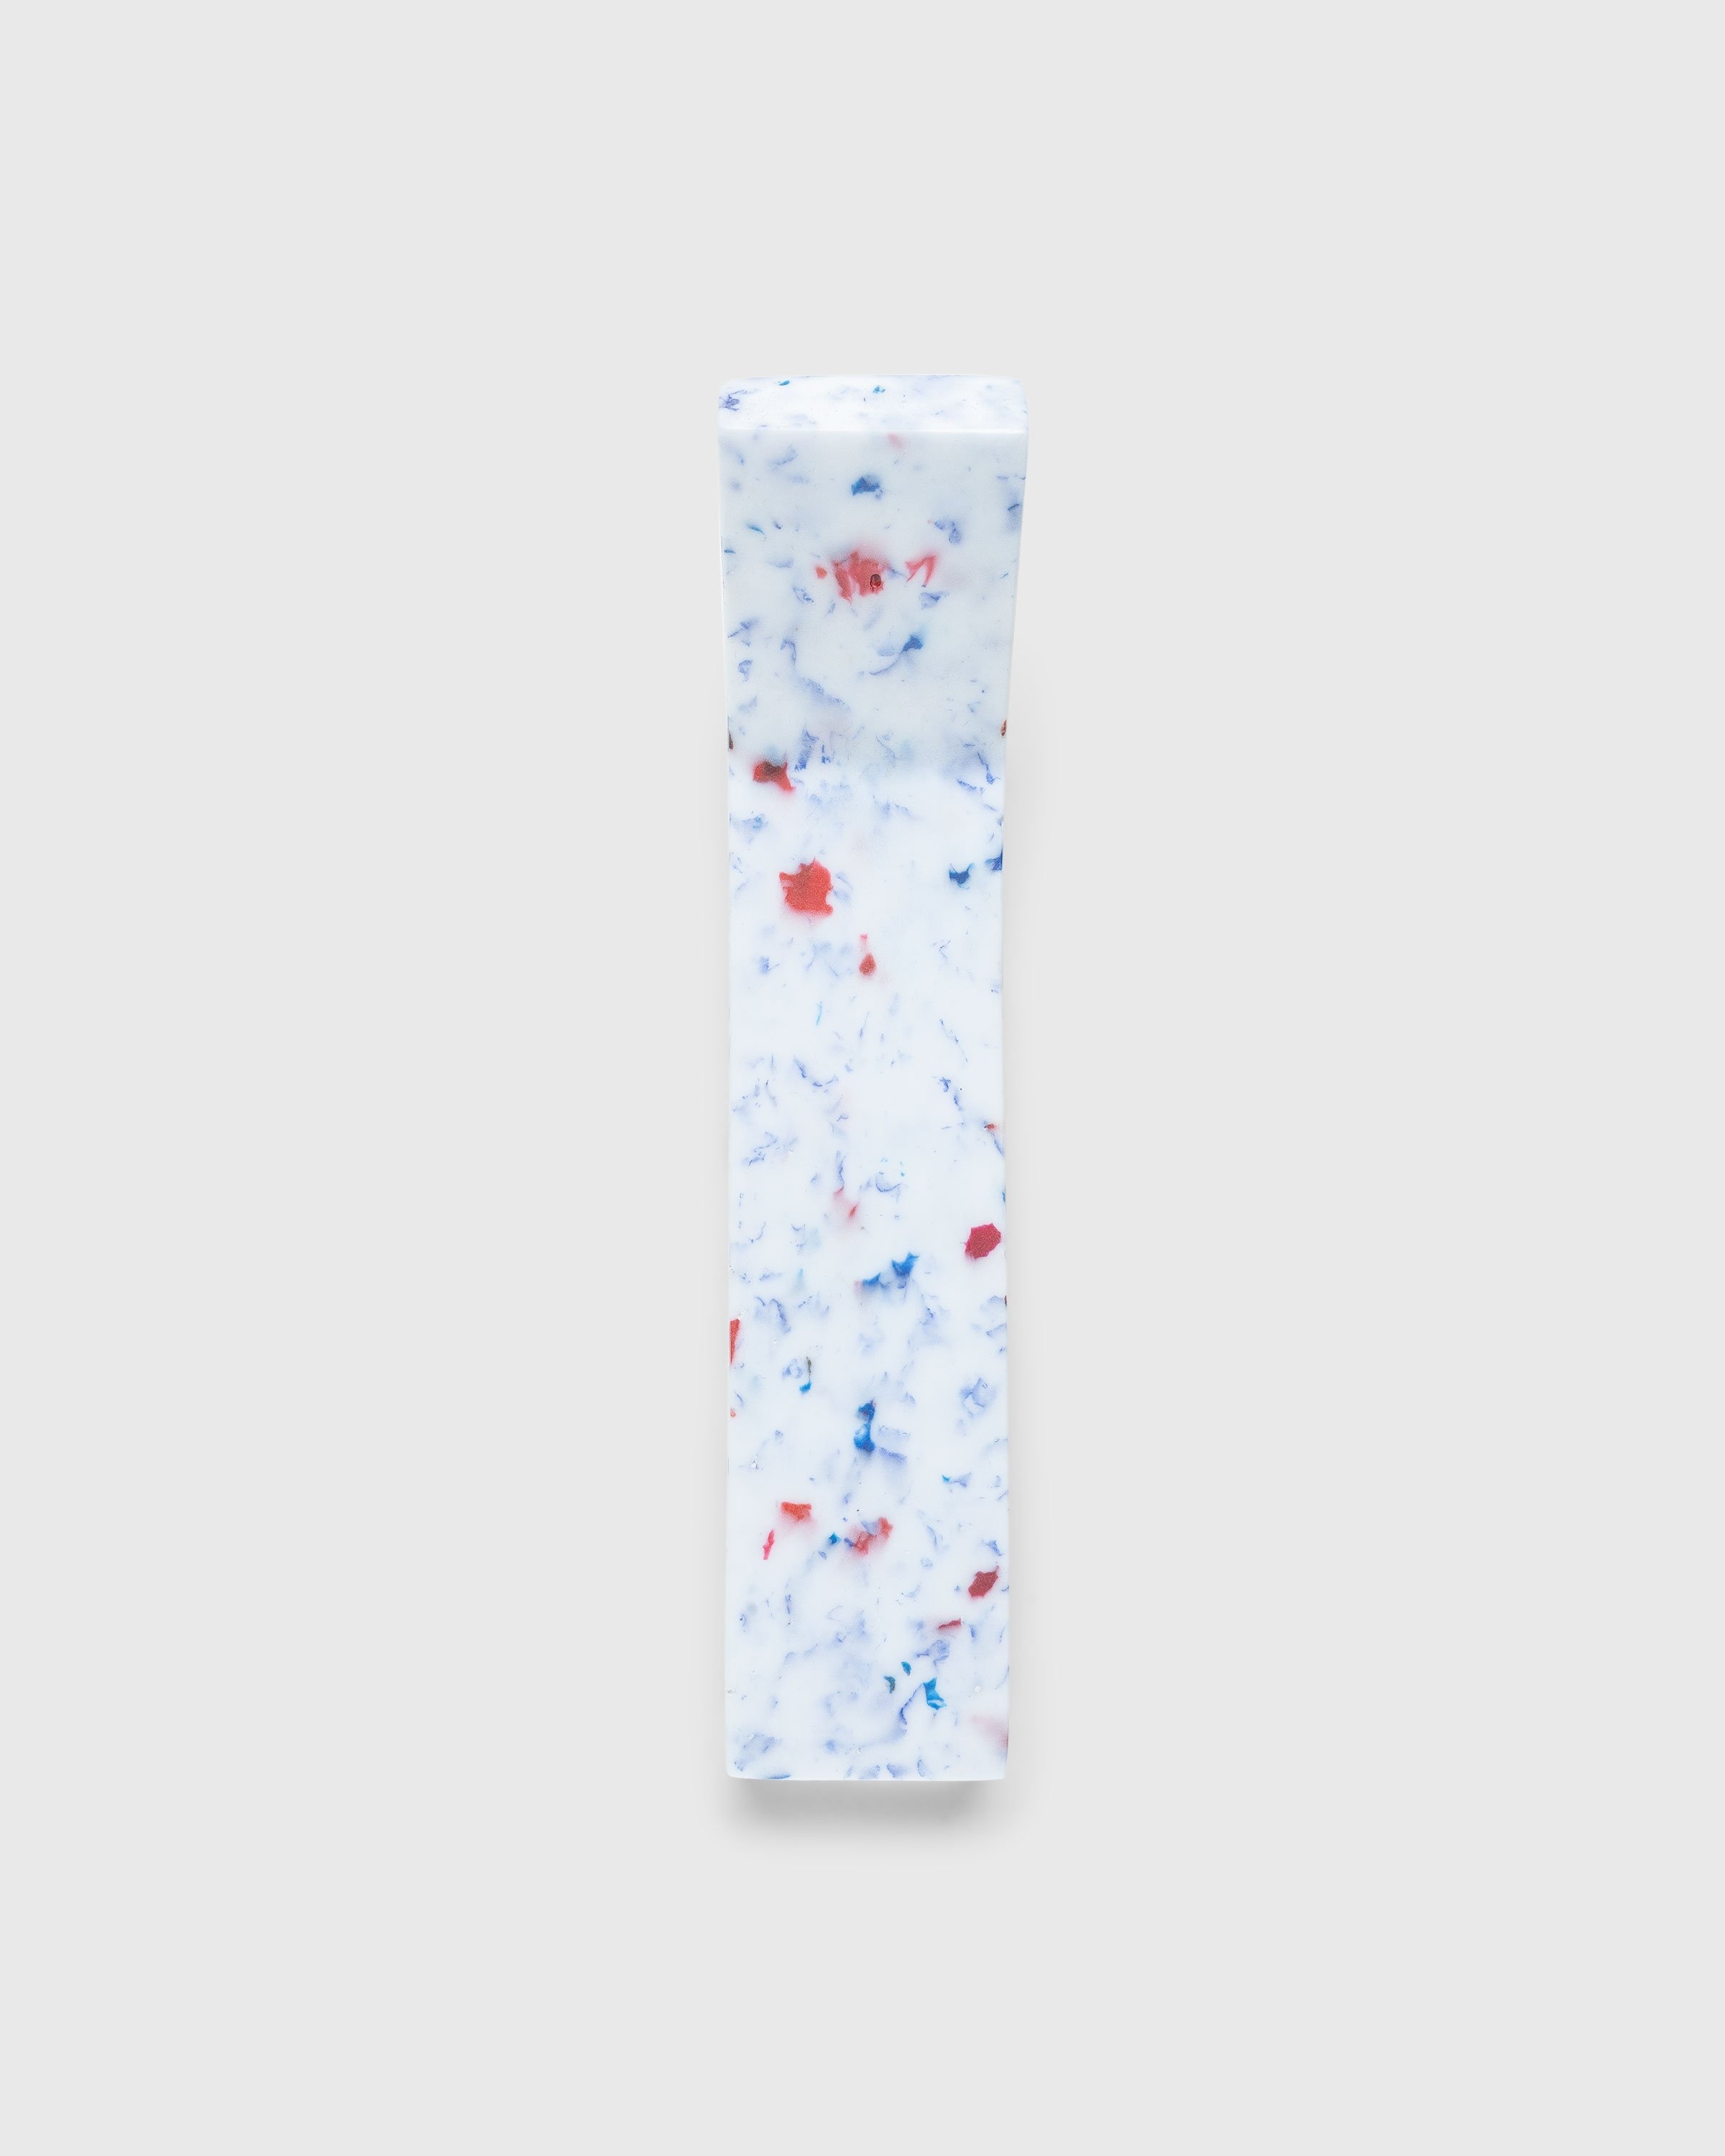 Space Available Studio – Incense Sculpture White - Deco - White - Image 1